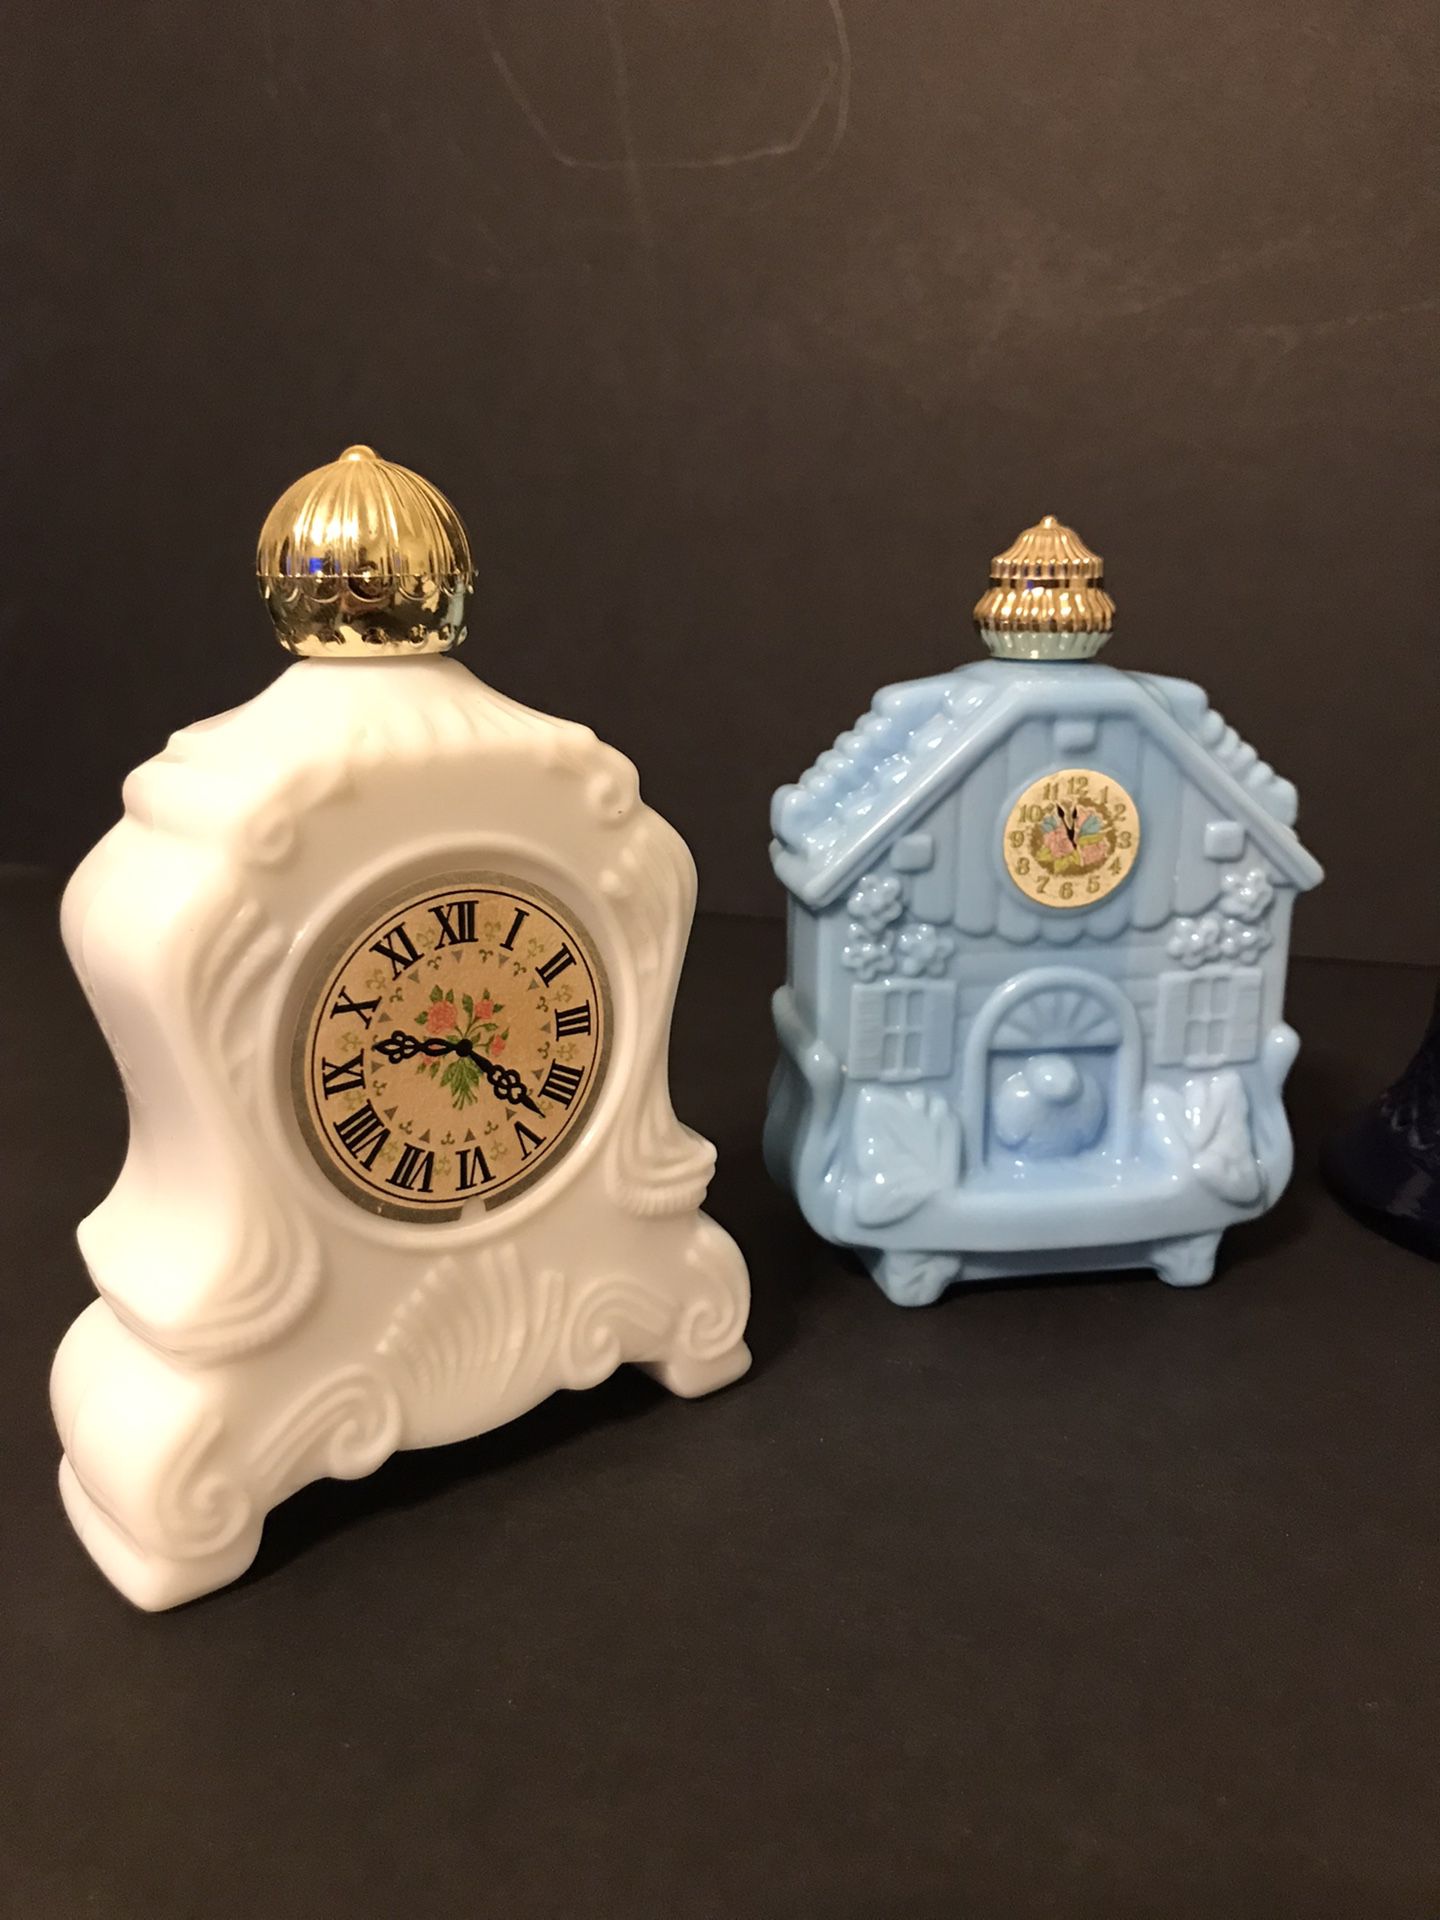 4 Vintage Avon Fairytale Bottles- 2 Large Clocks, 1 Stagecoach, 1 Blue Bell